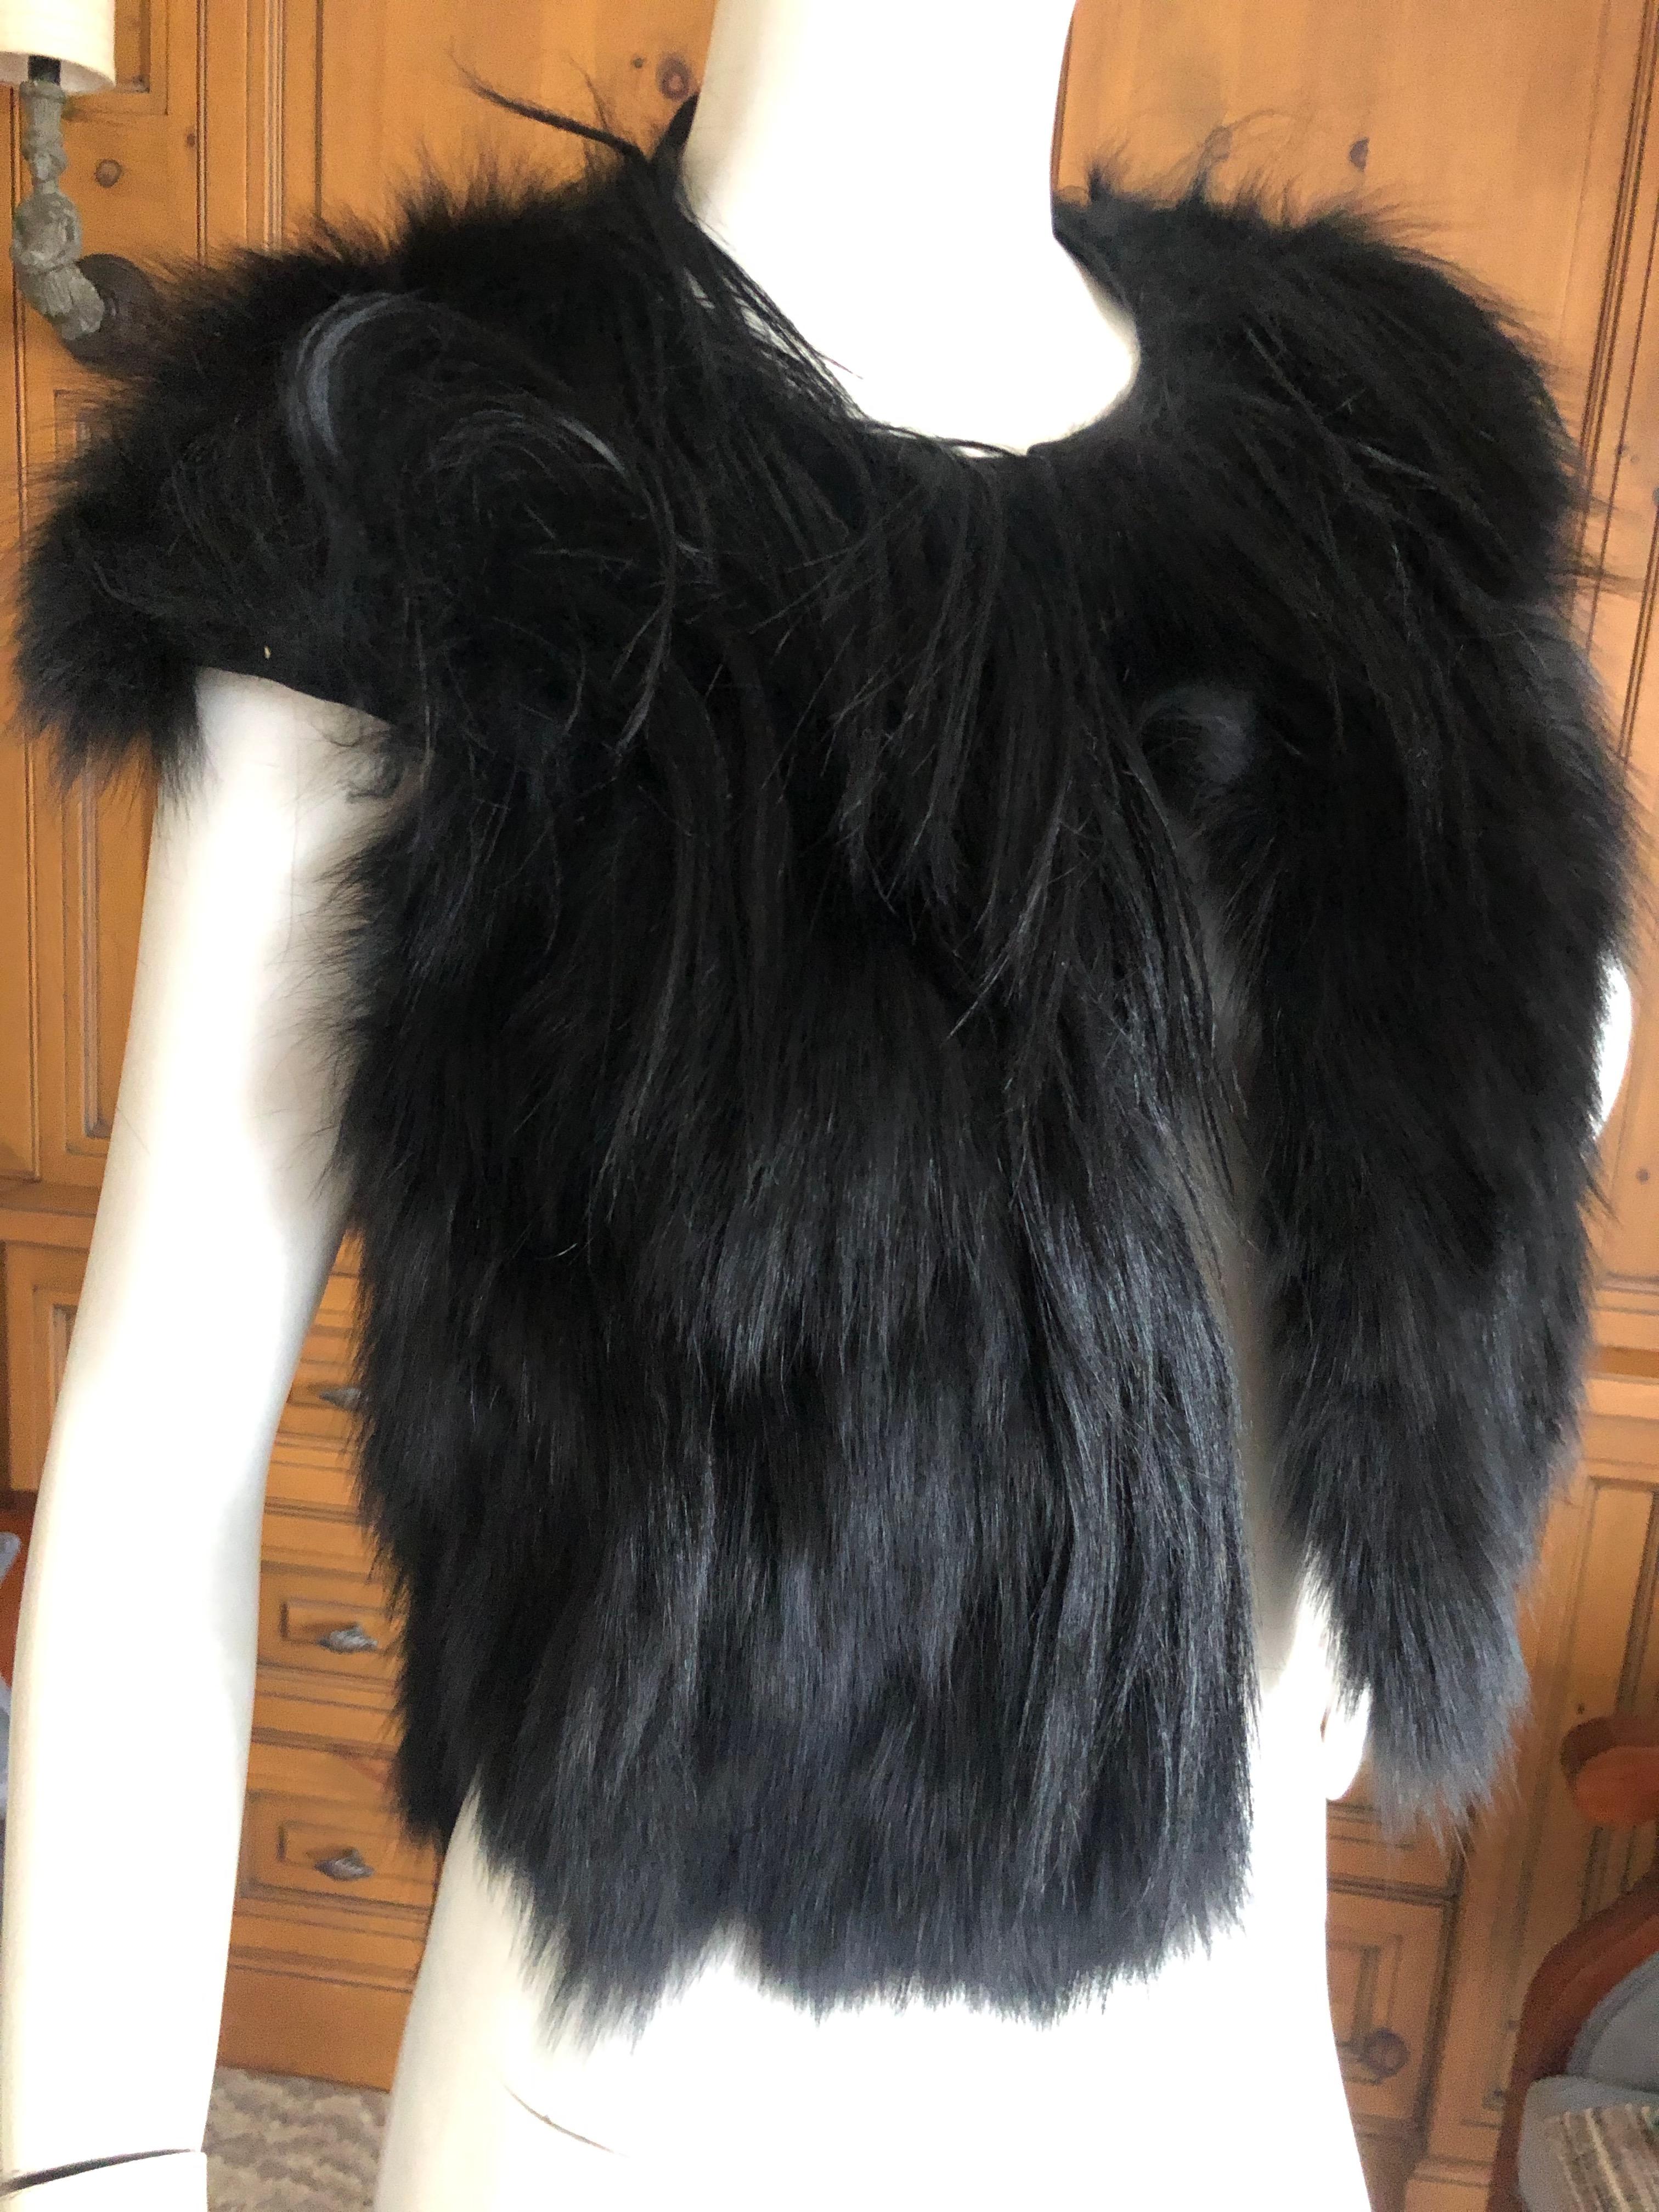 J. Mendel Paris Black Fox Fur Vest
This would be so beautiful over a leather jacket
17